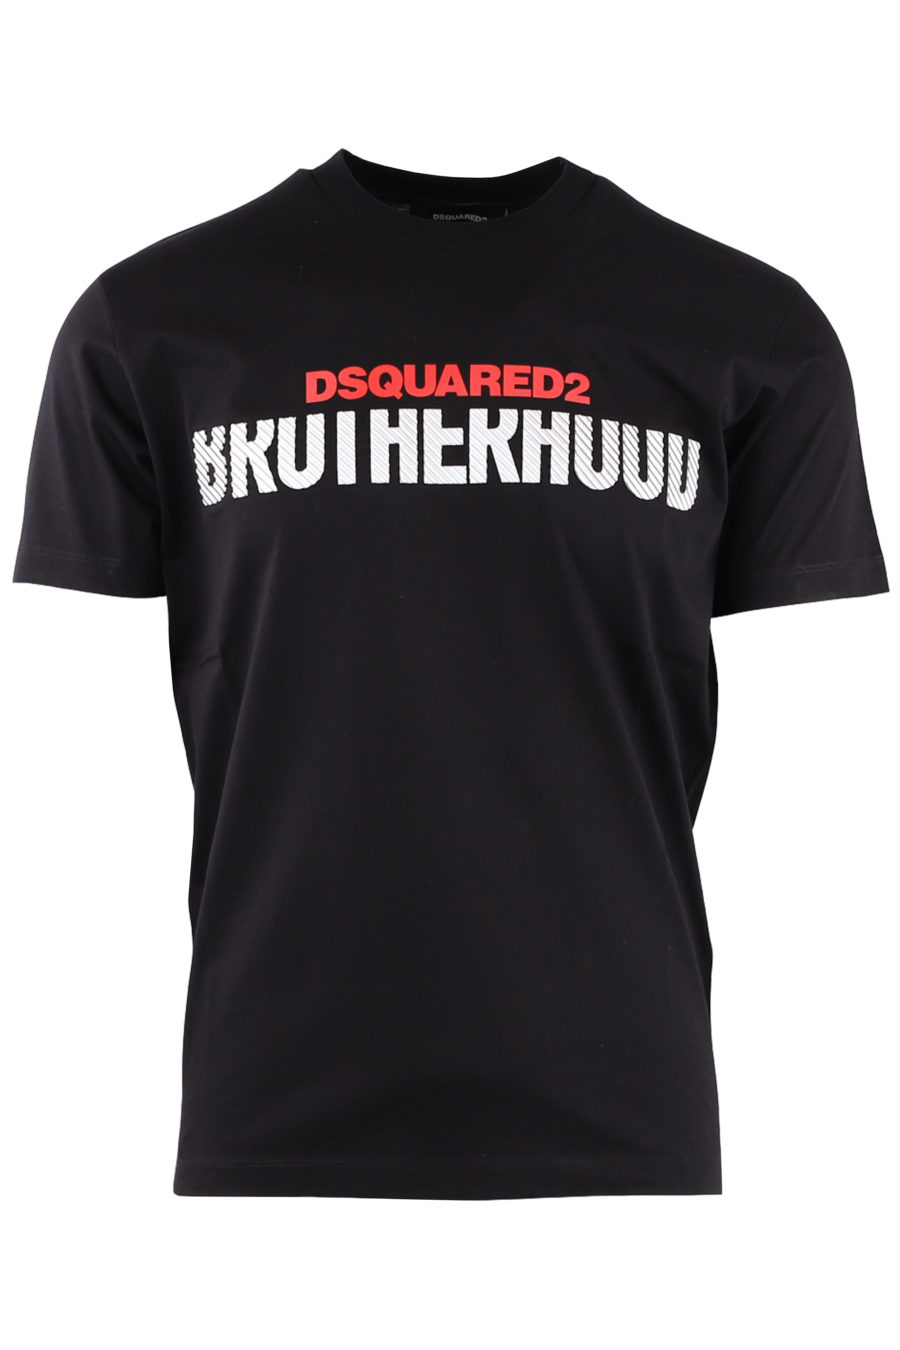 Black T-shirt "brotherhood" - 7c5469303c0786a81fb33909b122e74391ebbec1